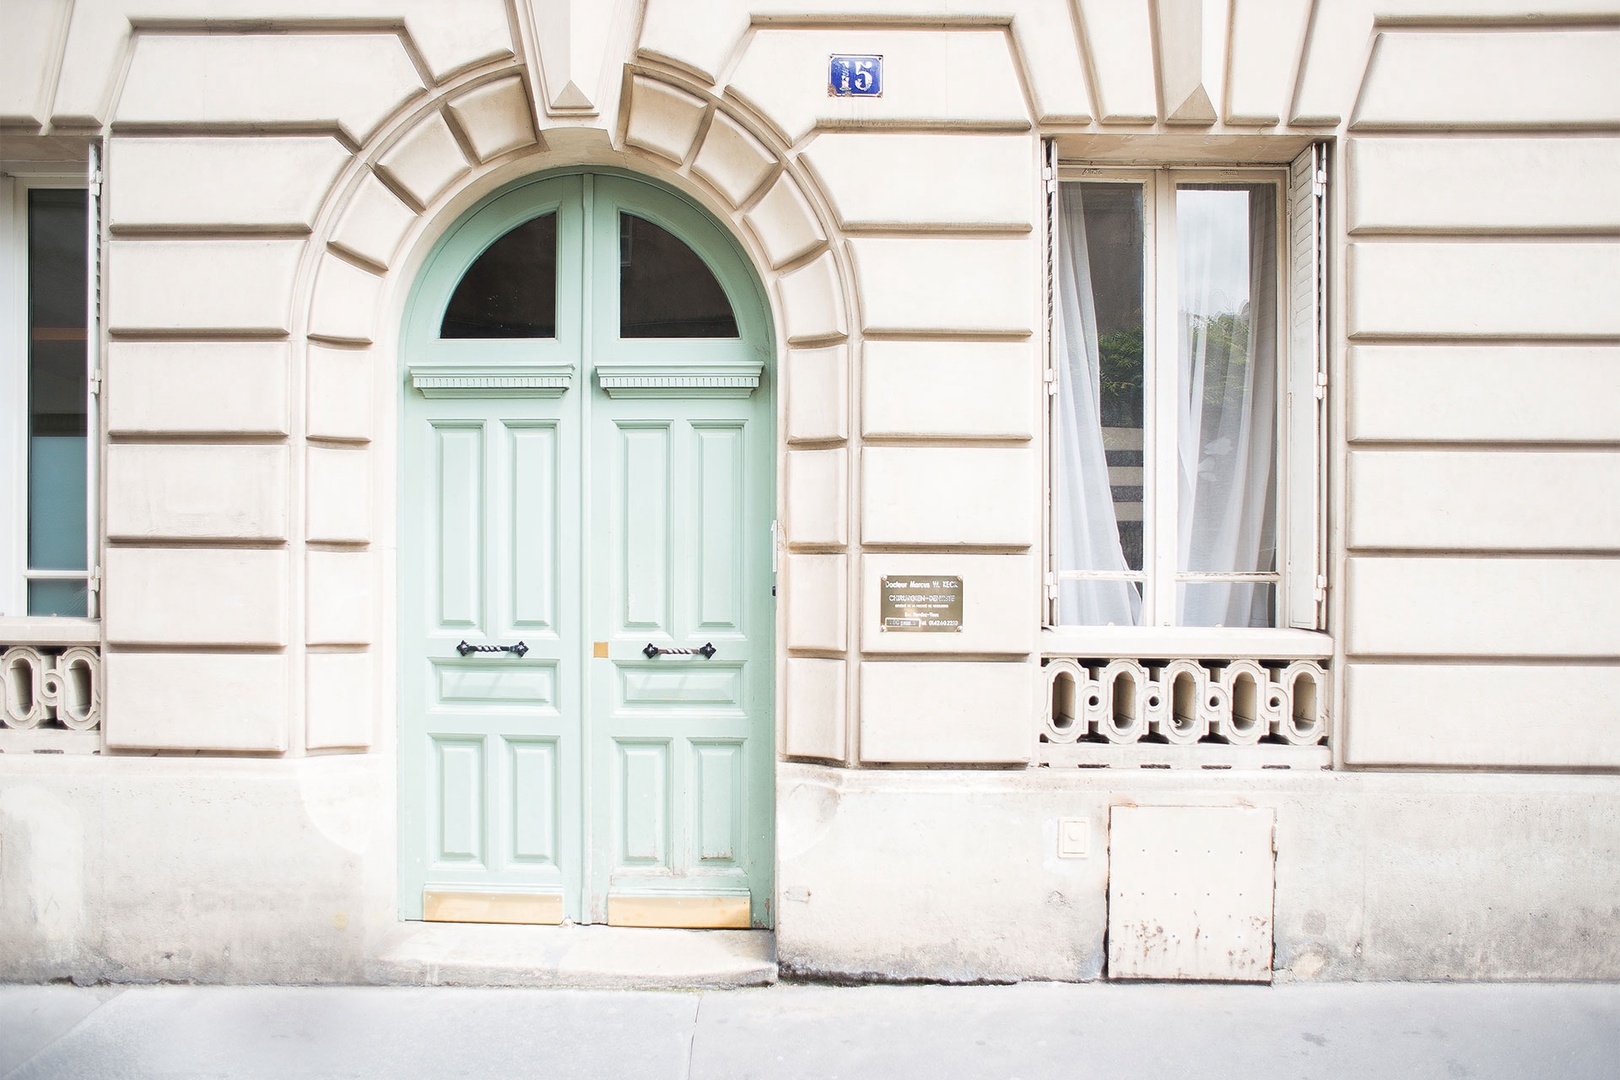 Gorgeous Parisian buildings line every street near the Bourgogne